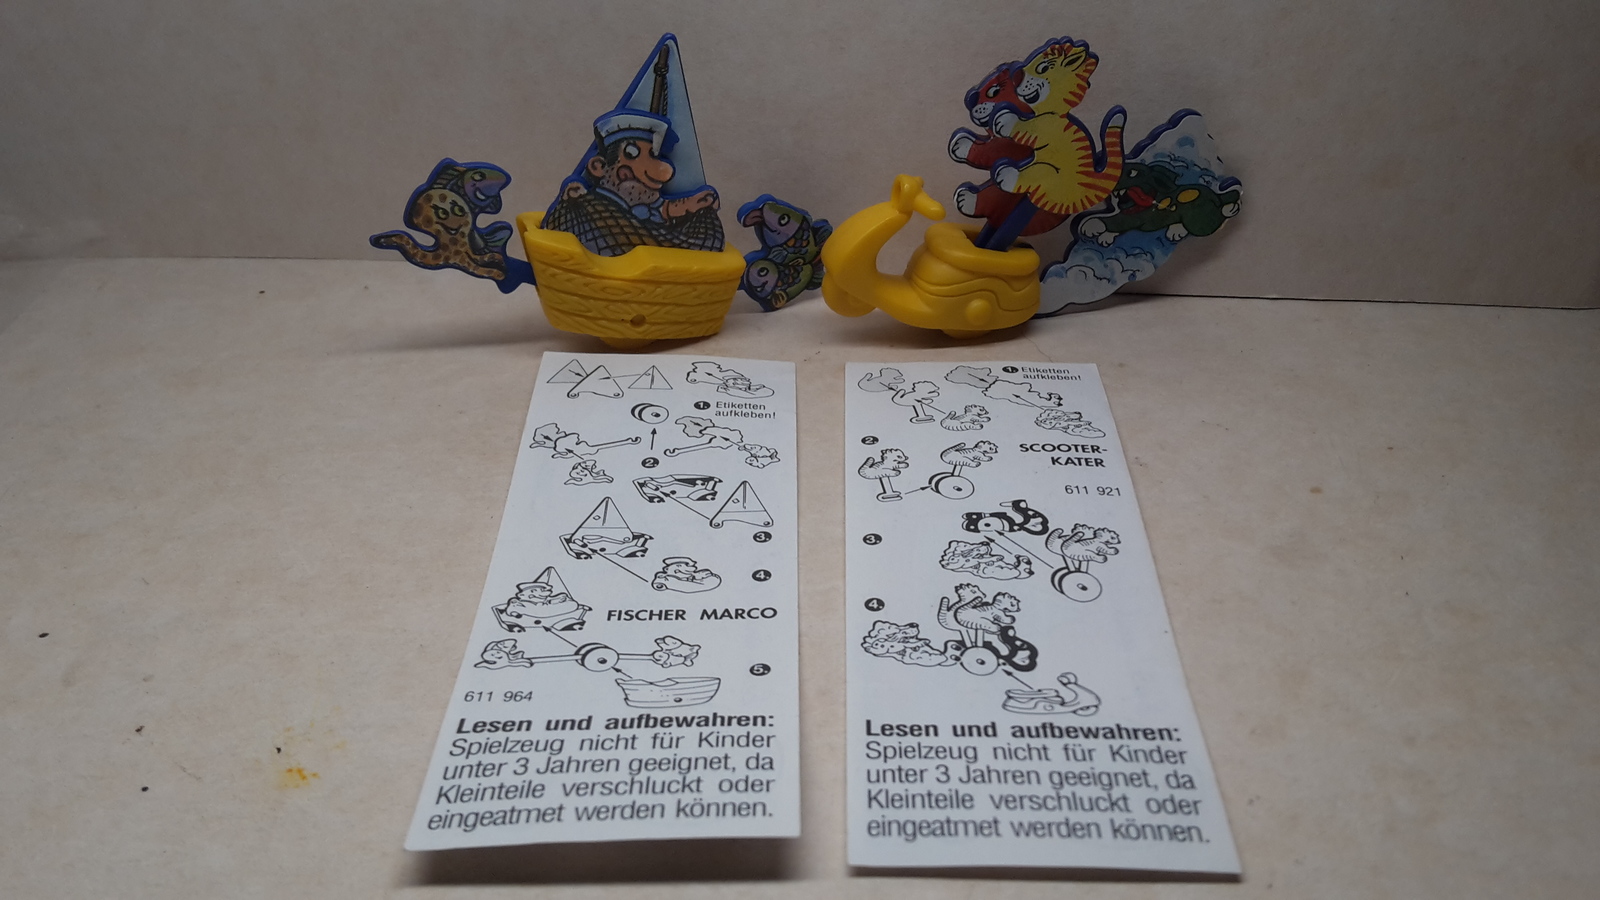 Kinder - 1997 Spiel und spass am meer - complete set + 2 papers - surprise eggs - $2.50